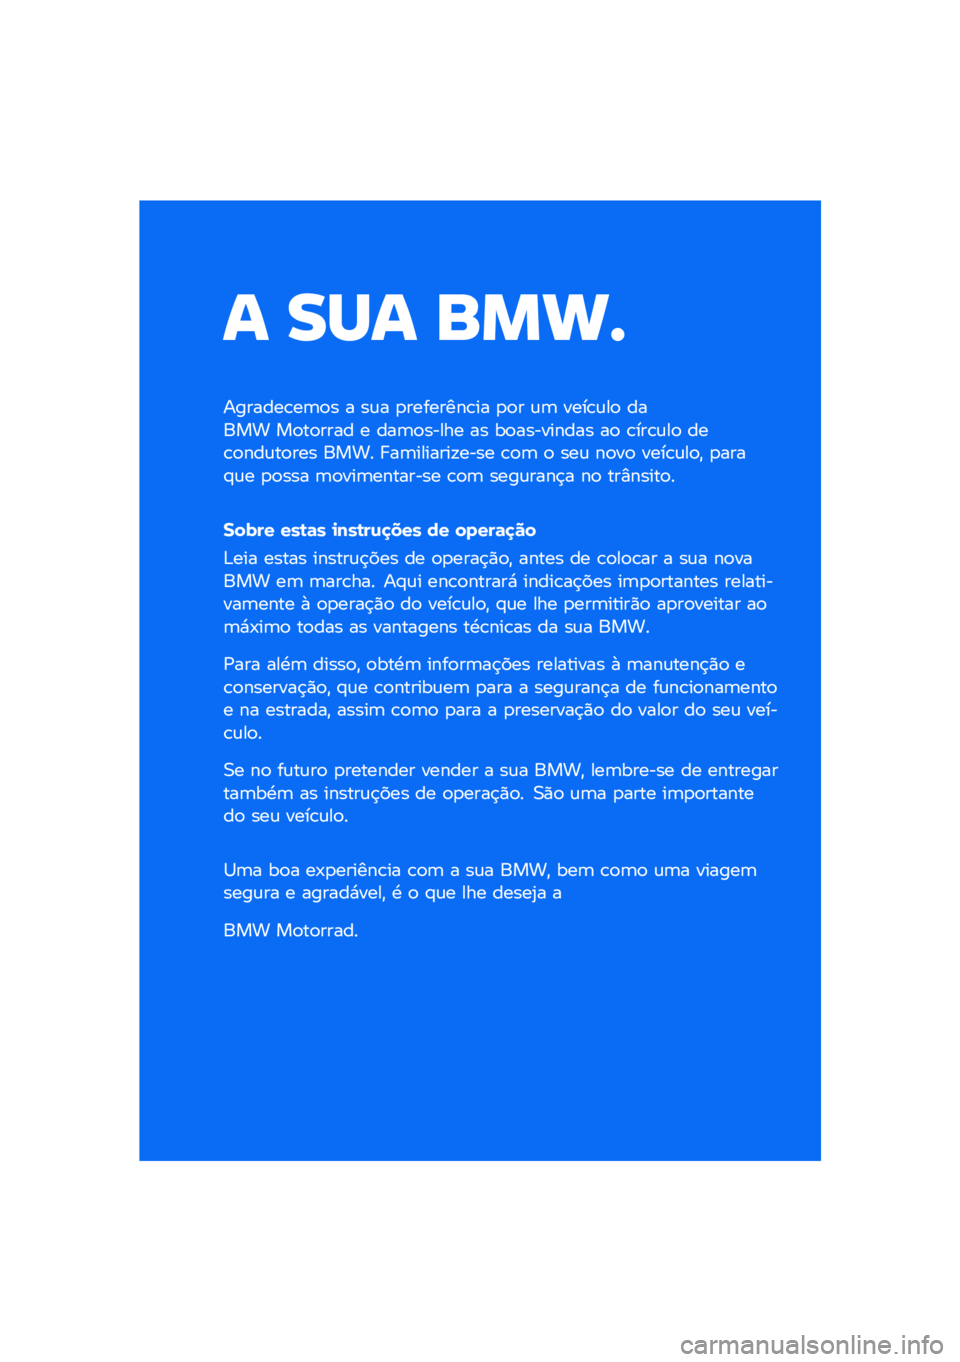 BMW MOTORRAD R NINE T 2020  Manual do condutor (in Portuguese) � ��� ����\b
�������\b��	�
� � ��\f� �
��������\b�� �
�
� �\f�	 ����\b�\f��
 ����� ��
��
���� � ���	�
����� �� ��
��������� ��
 �\b���